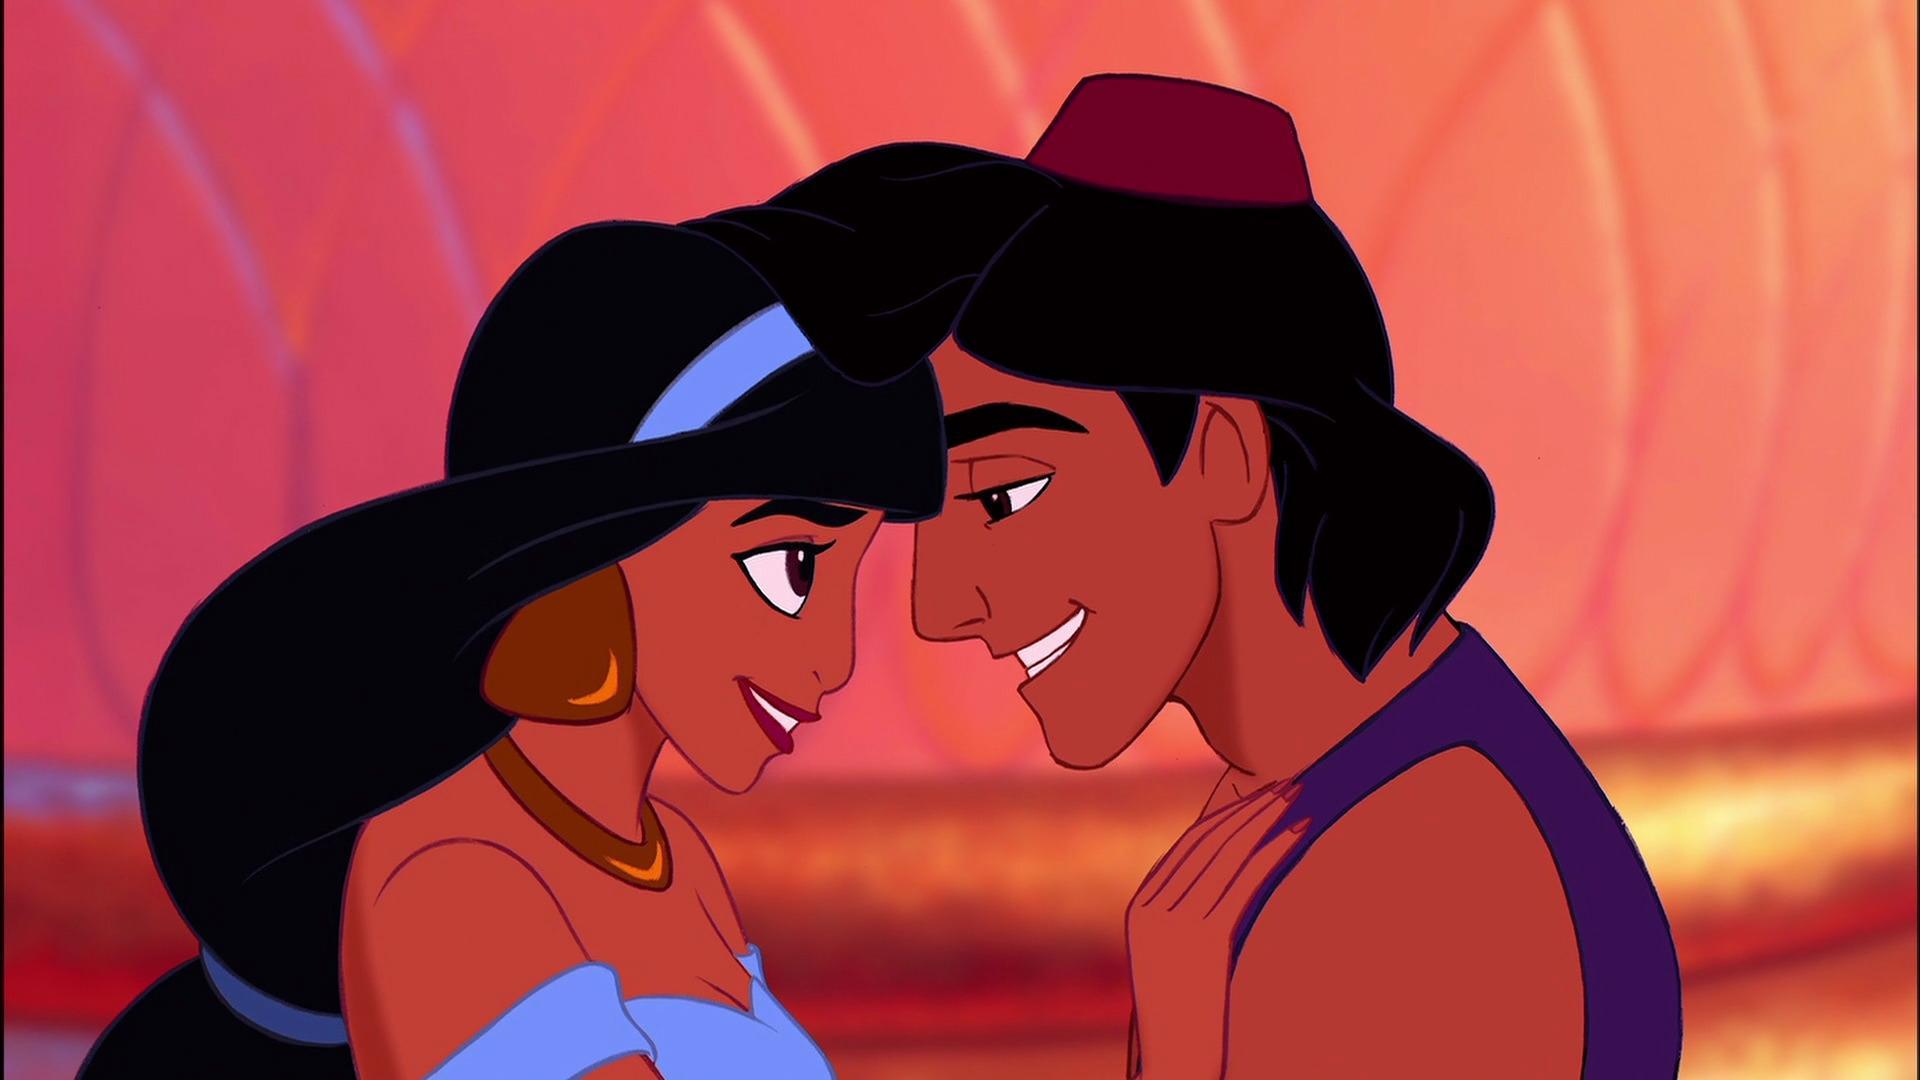 Disney’s Aladdin Film finds its Leads